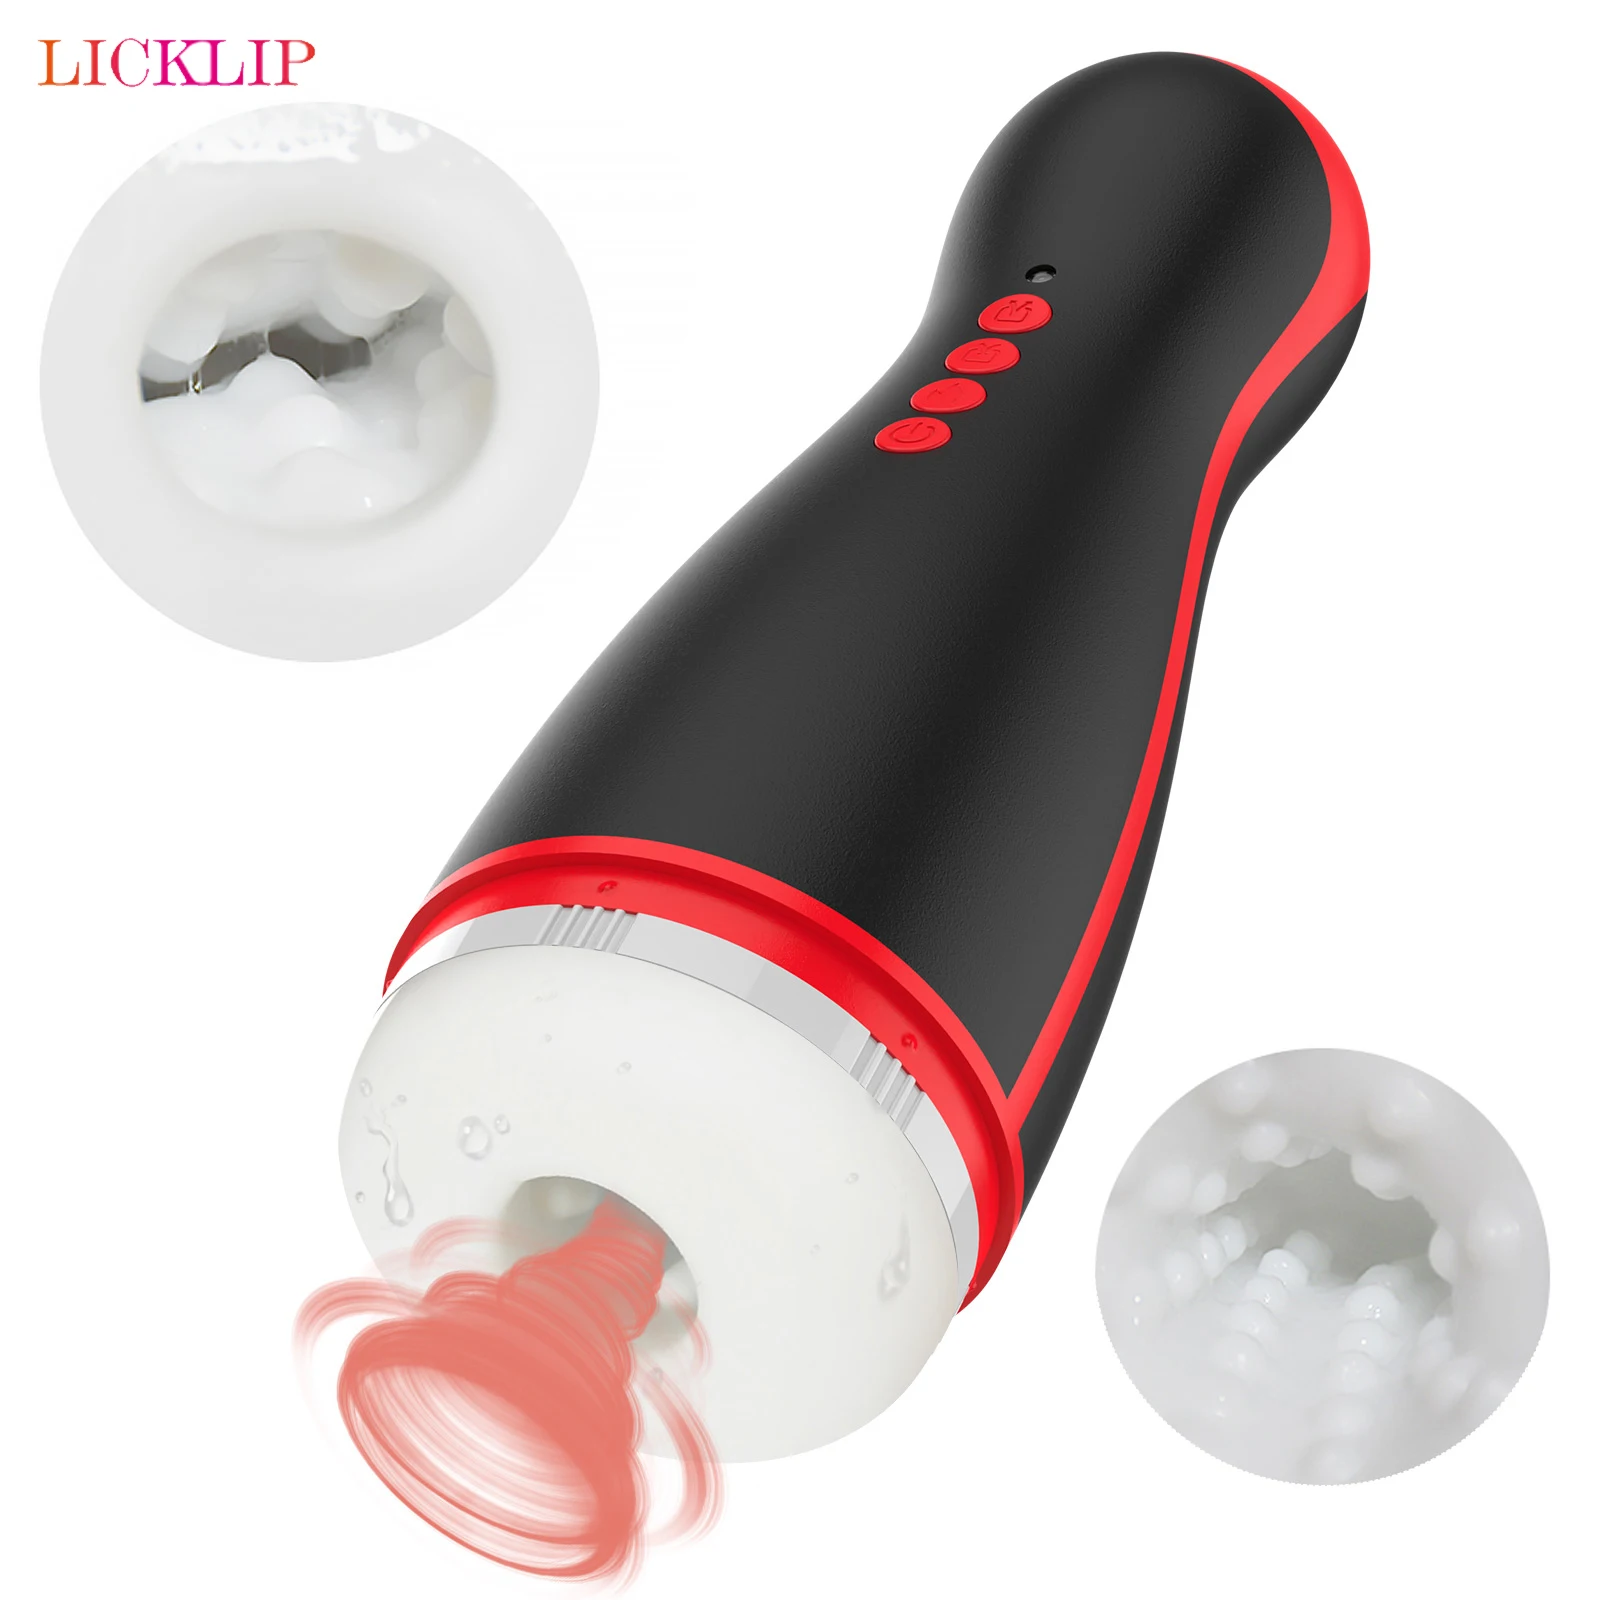 LICKLIP Sucking Airplane Cup Male Automatic Heated Vibrating Masturbator Sex Toys